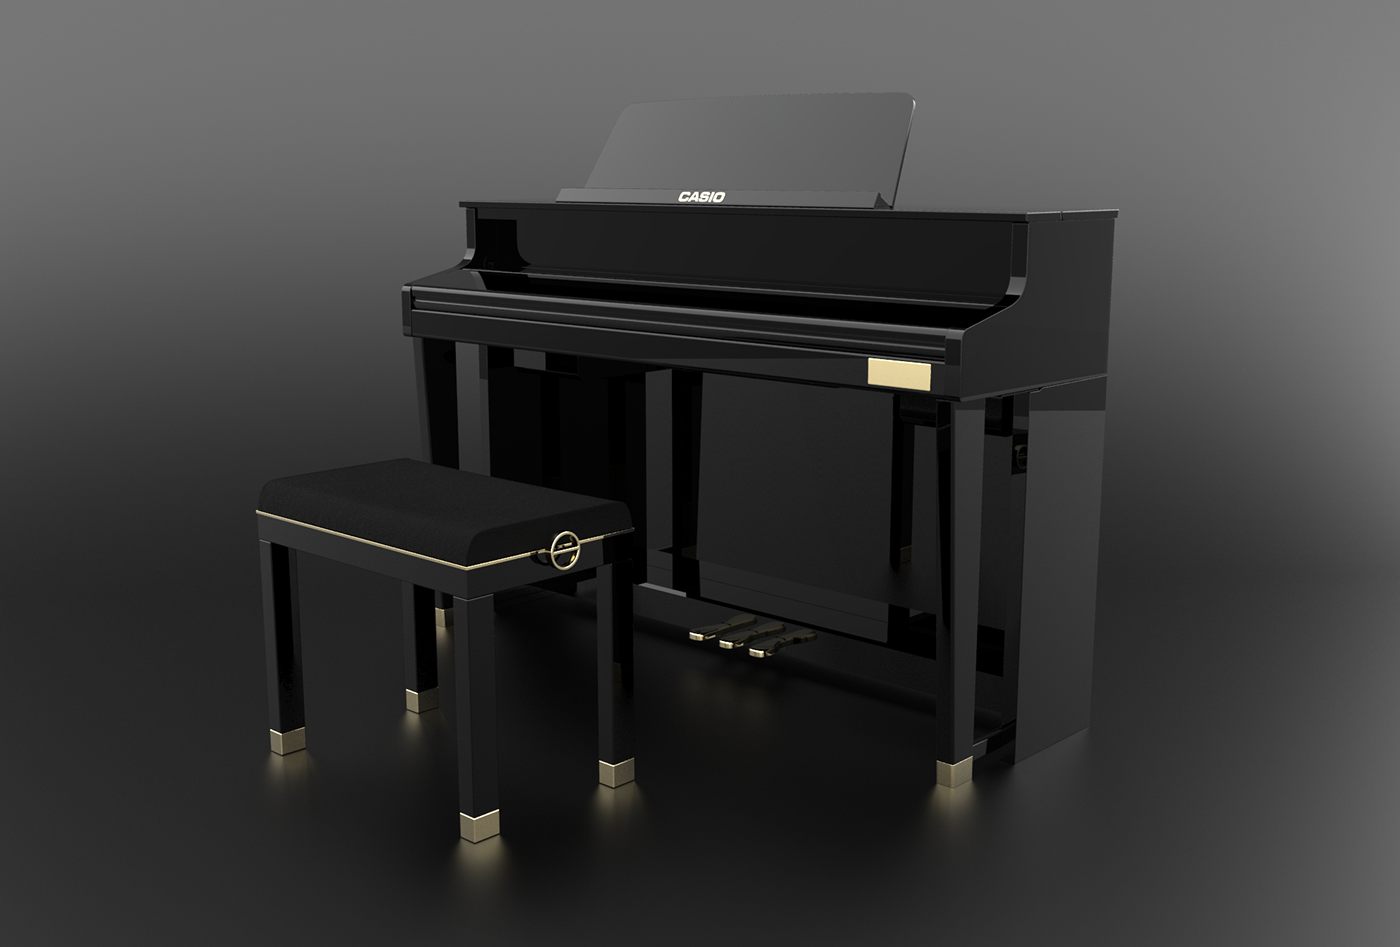 bench chair Piano Casio furniture design Competition wood metal interior design 